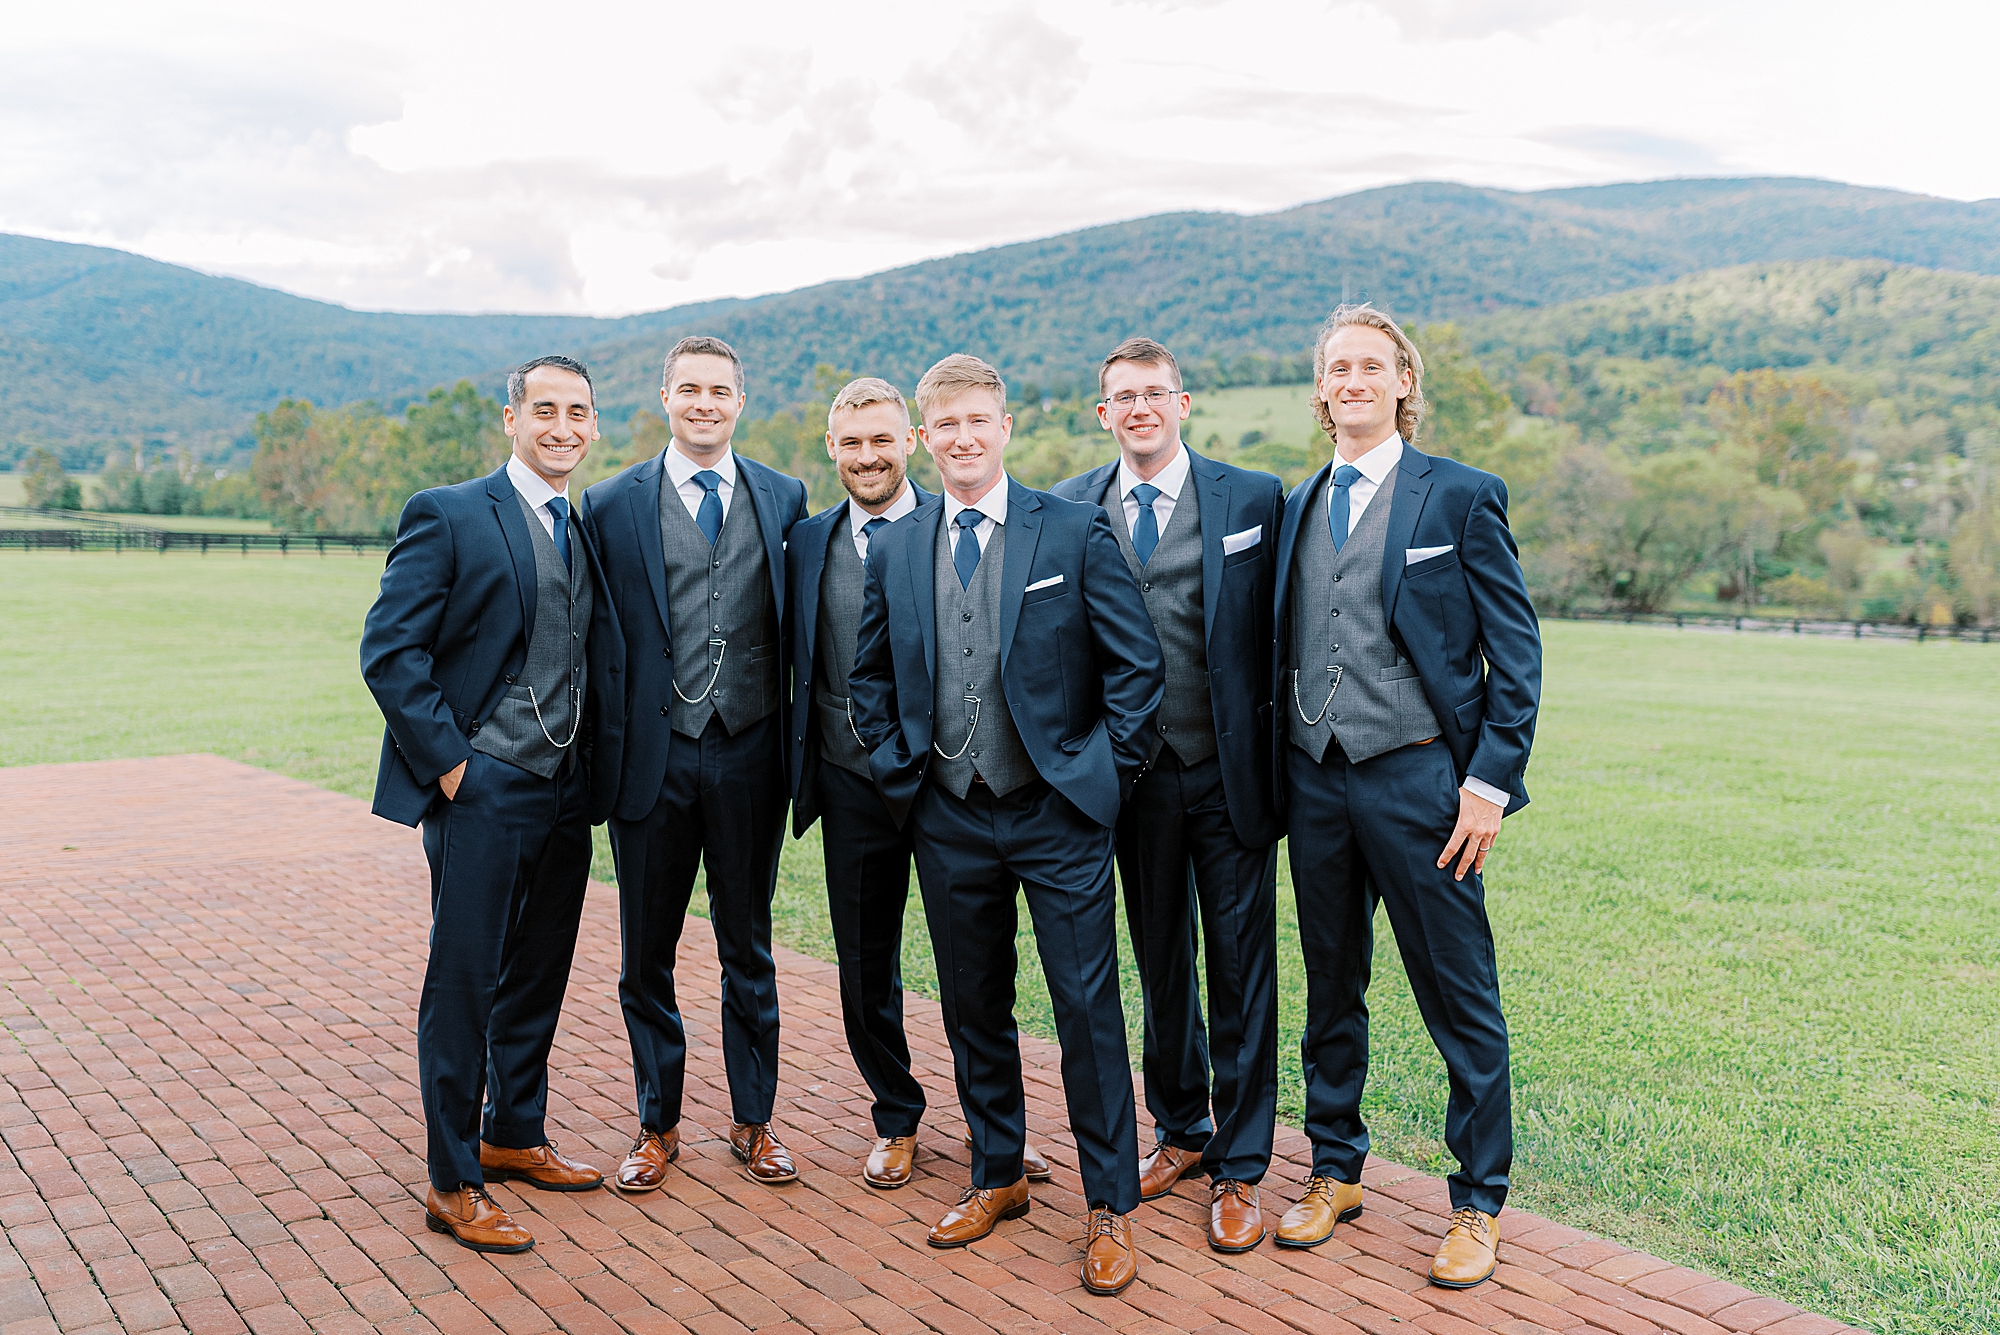 Groomsmen in blue suits at King Family Vineyards wedding.